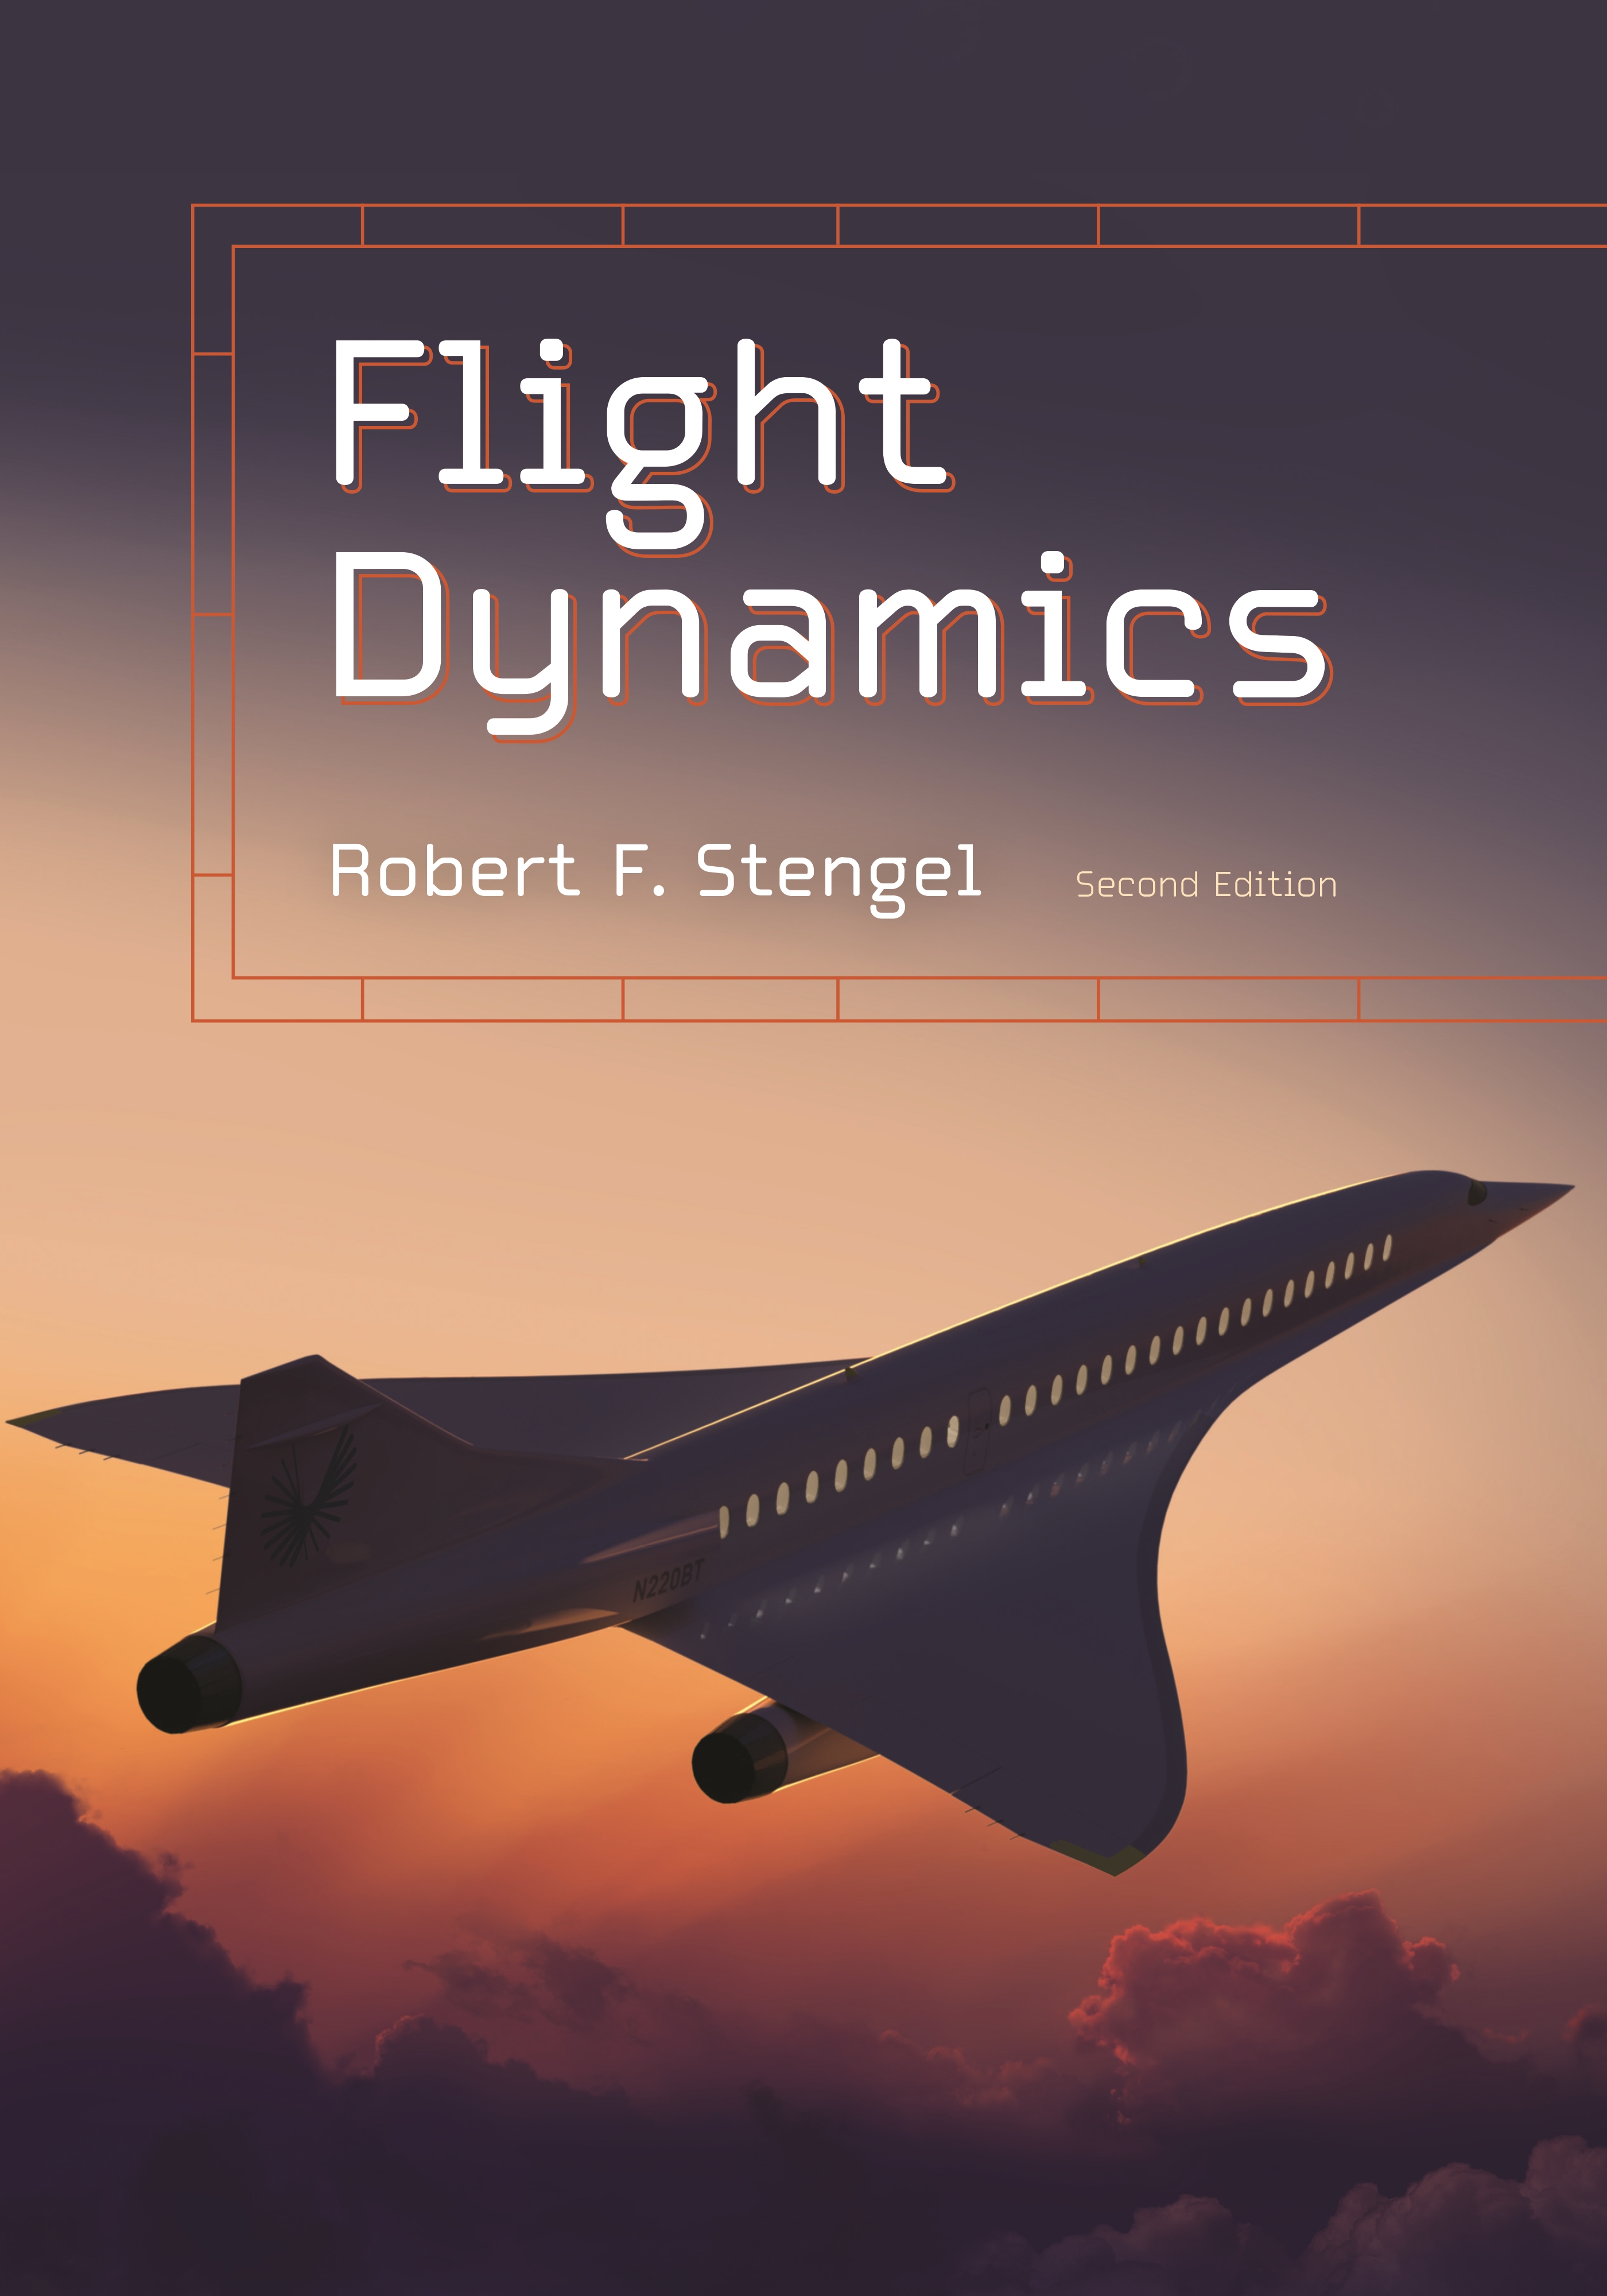 Princeton　University　Dynamics　Flight　Press